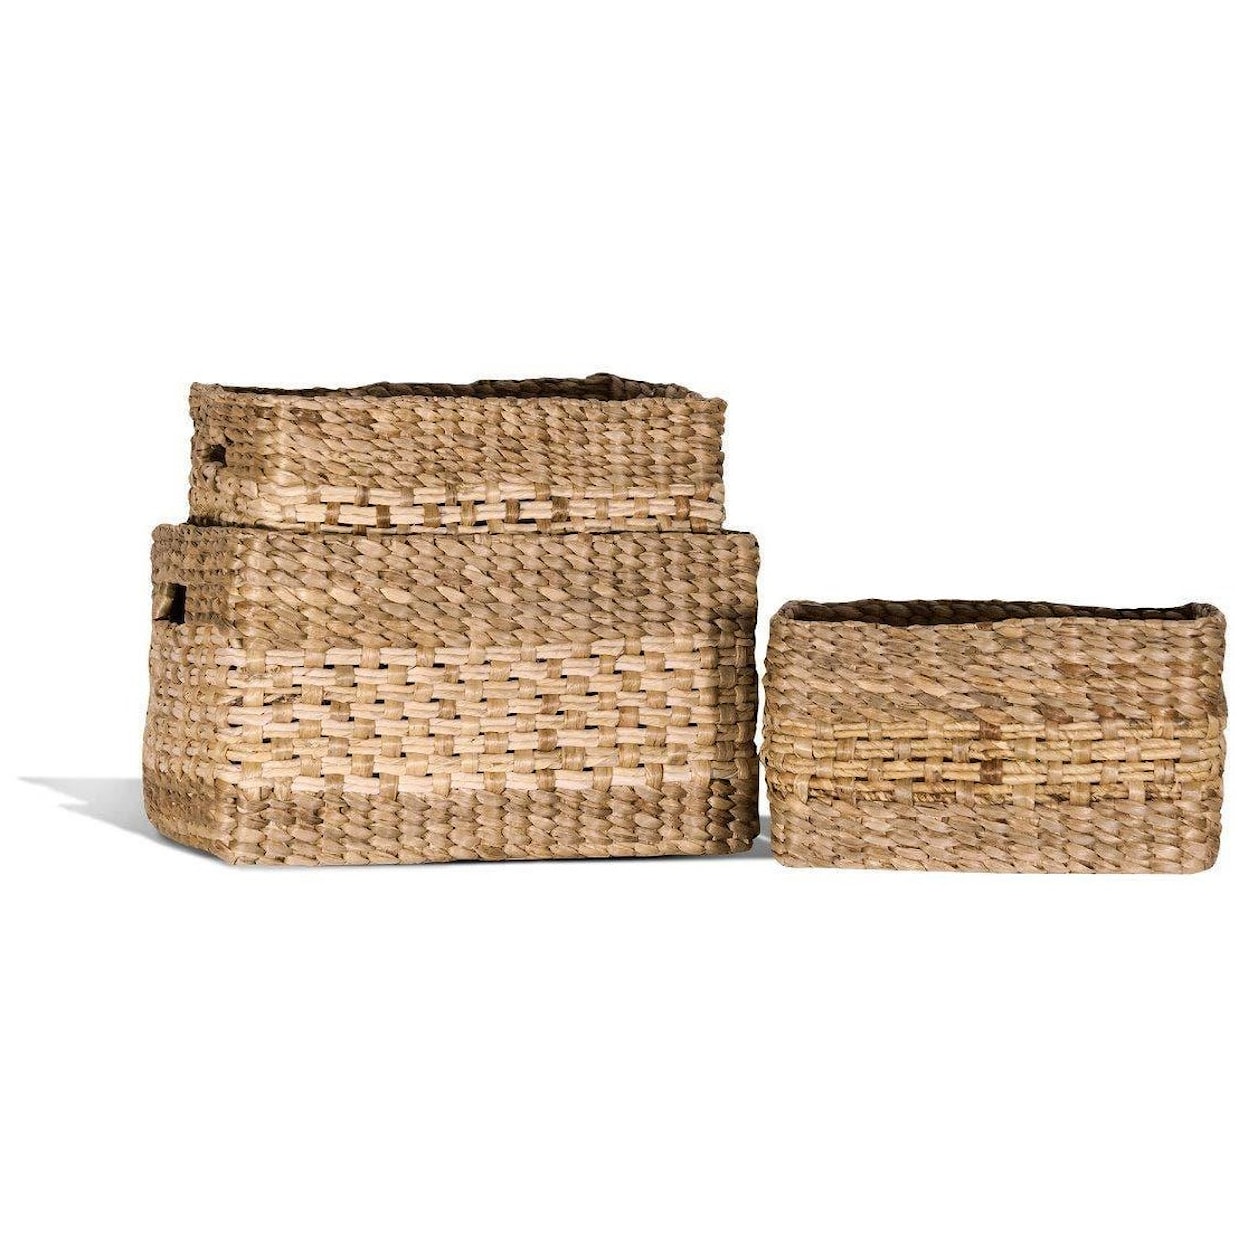 Ibolili Baskets and Sets Hyacinth Basket, Set of 3